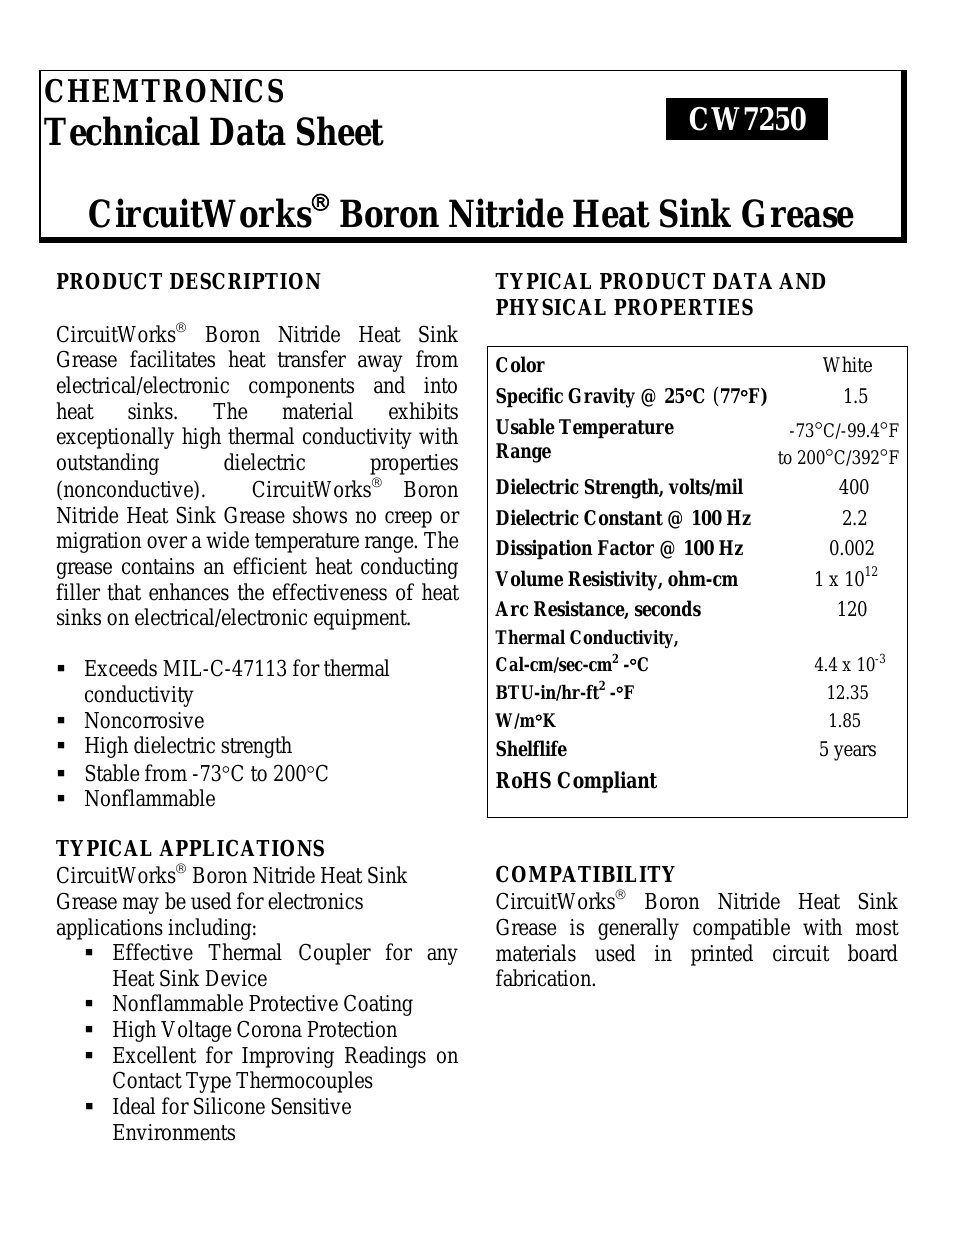 CircuitWorks® Boron Nitride Heat Sink Grease CW7250